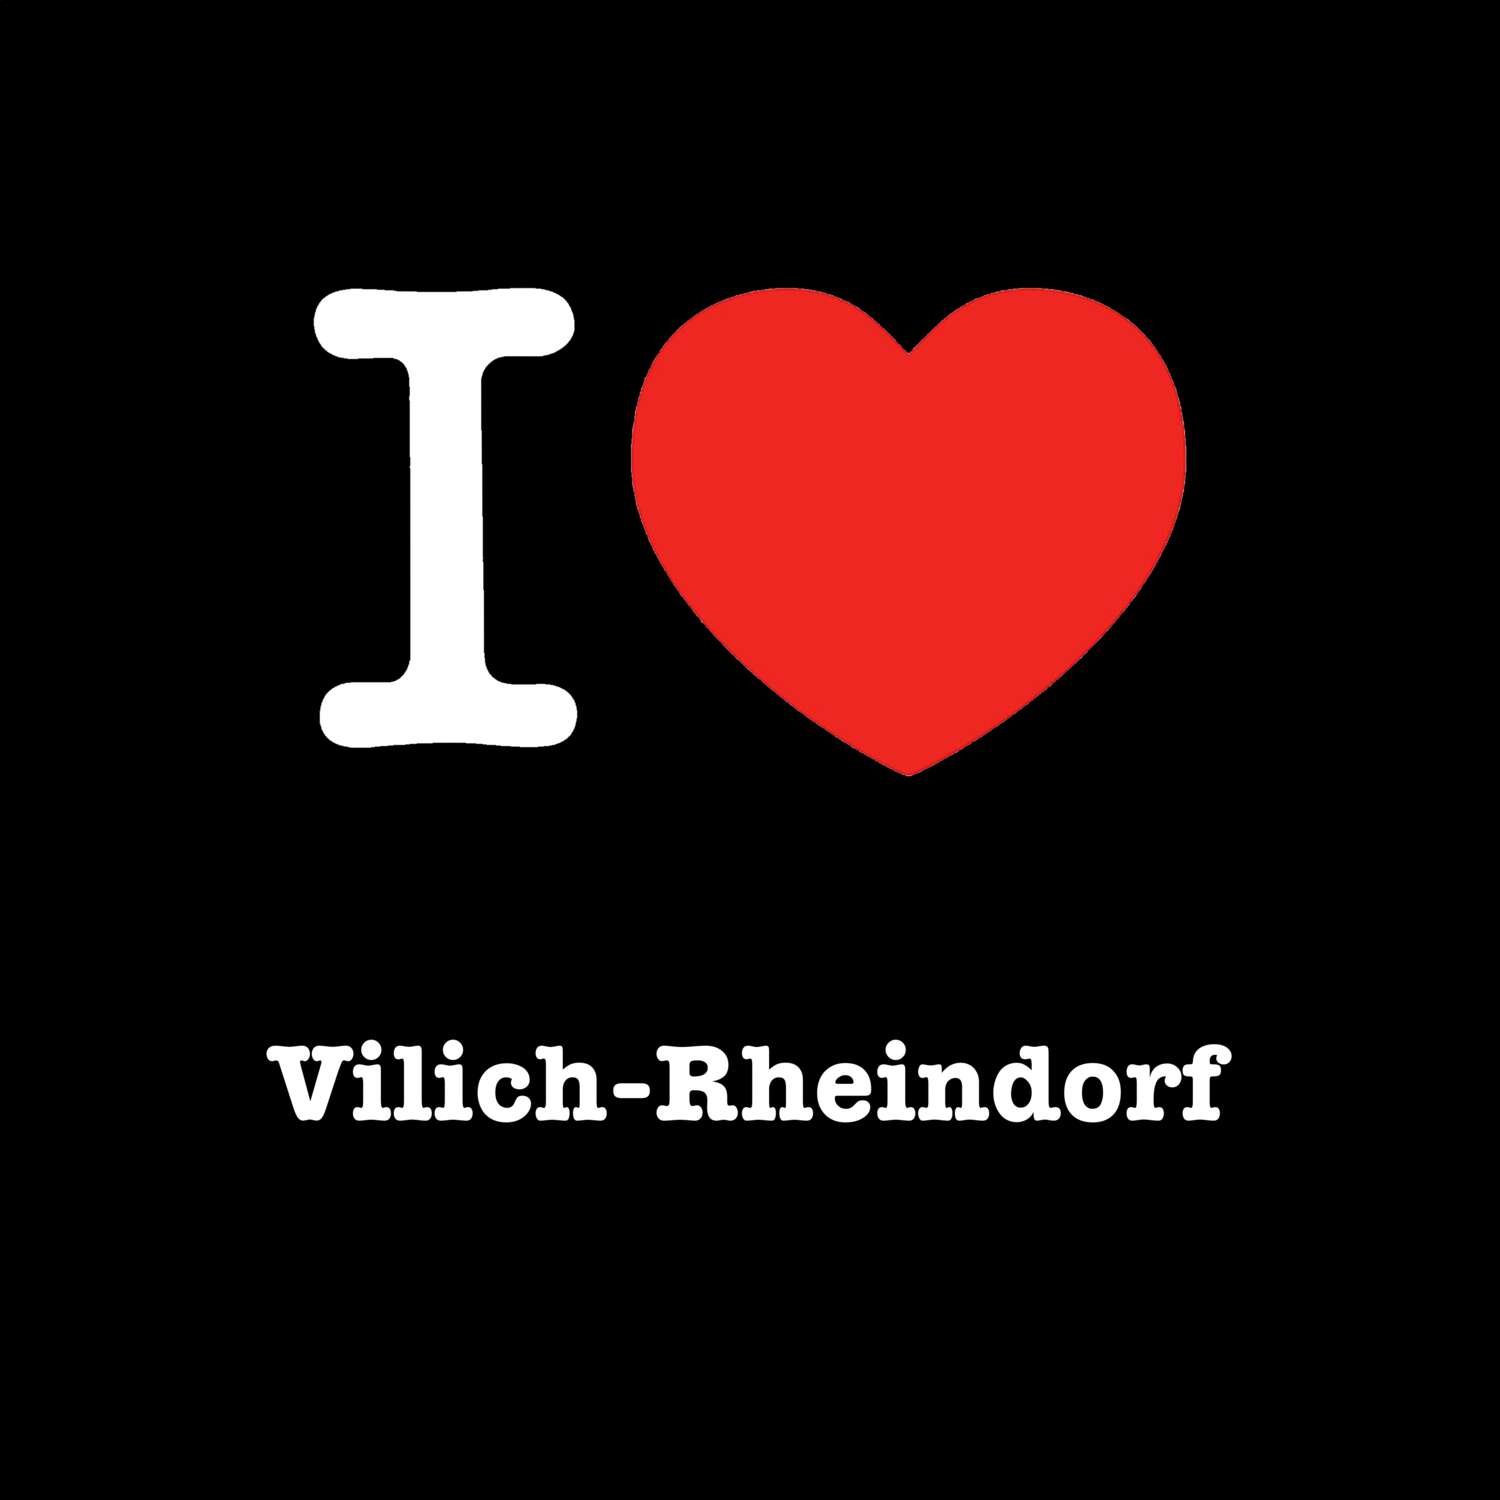 Vilich-Rheindorf T-Shirt »I love«